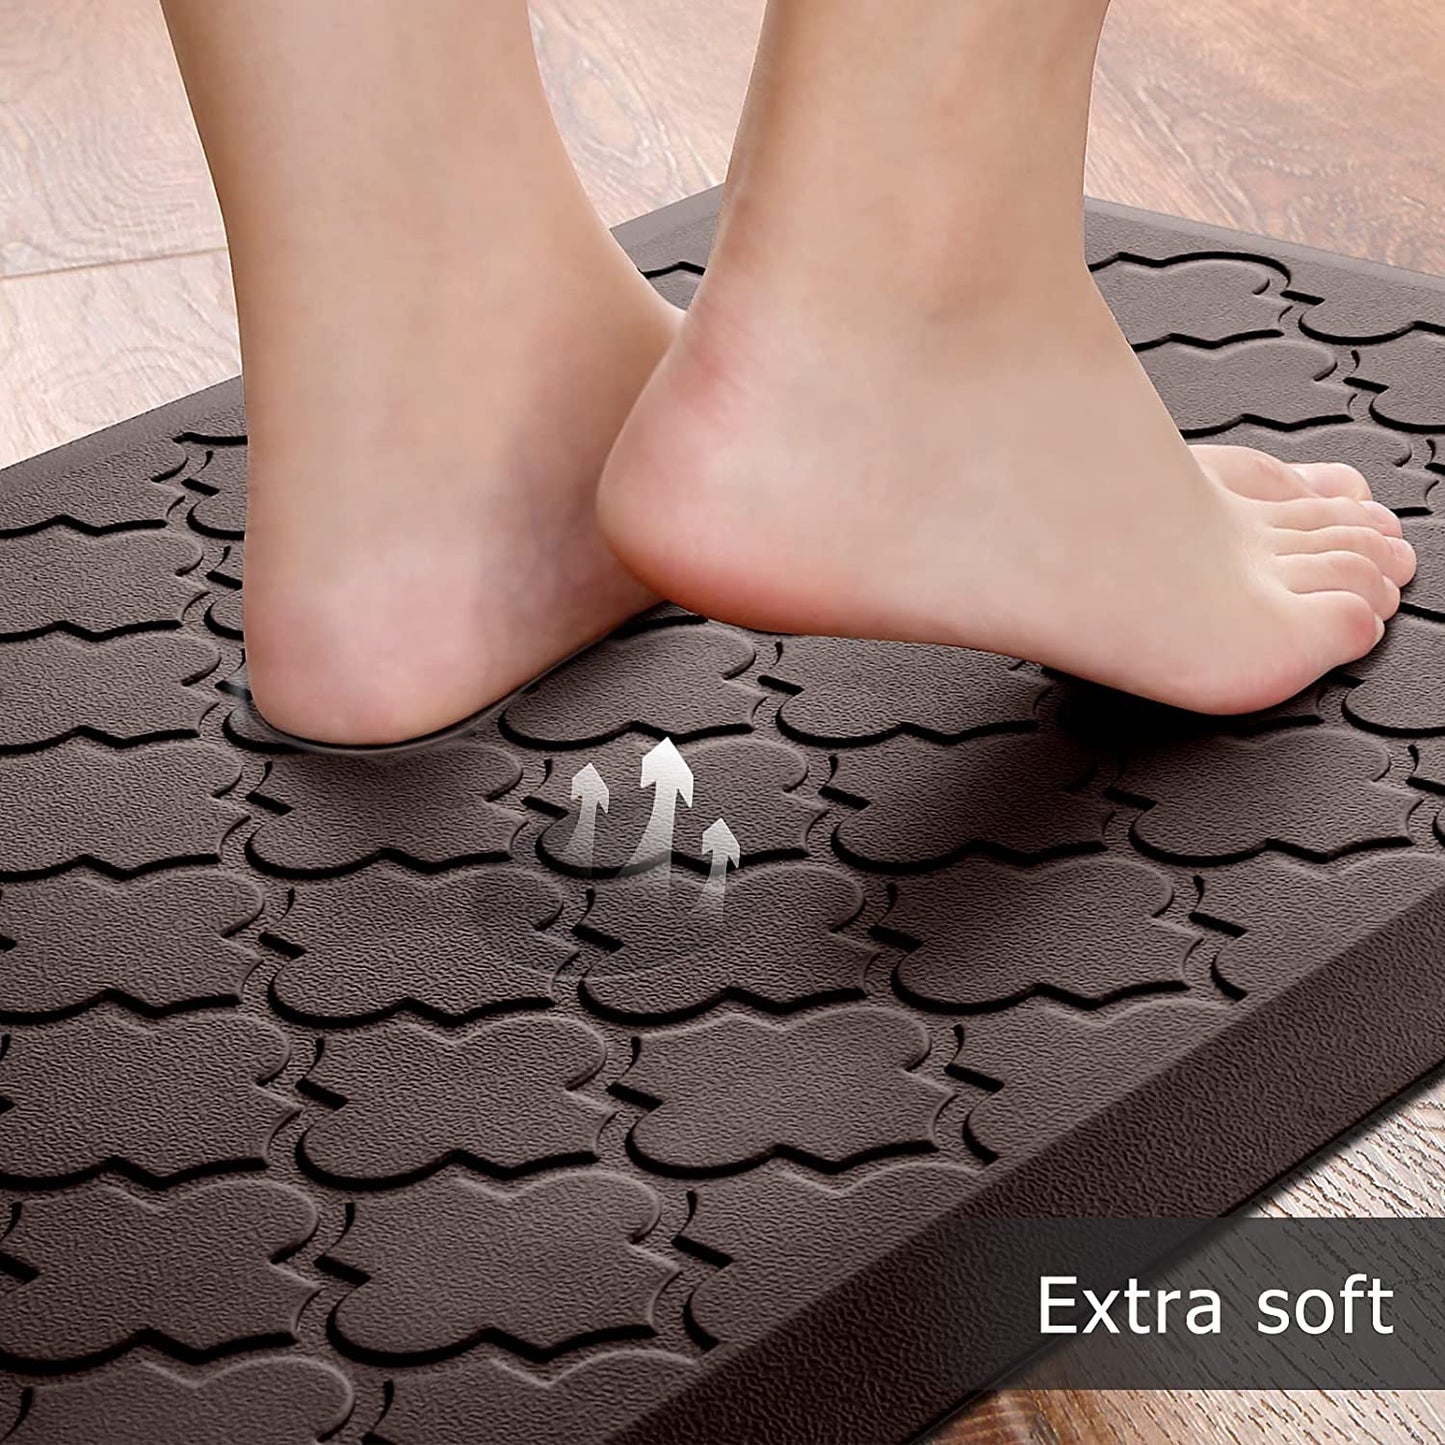 Comfort Foam Waterproof Non-Skid Kitchen Mat